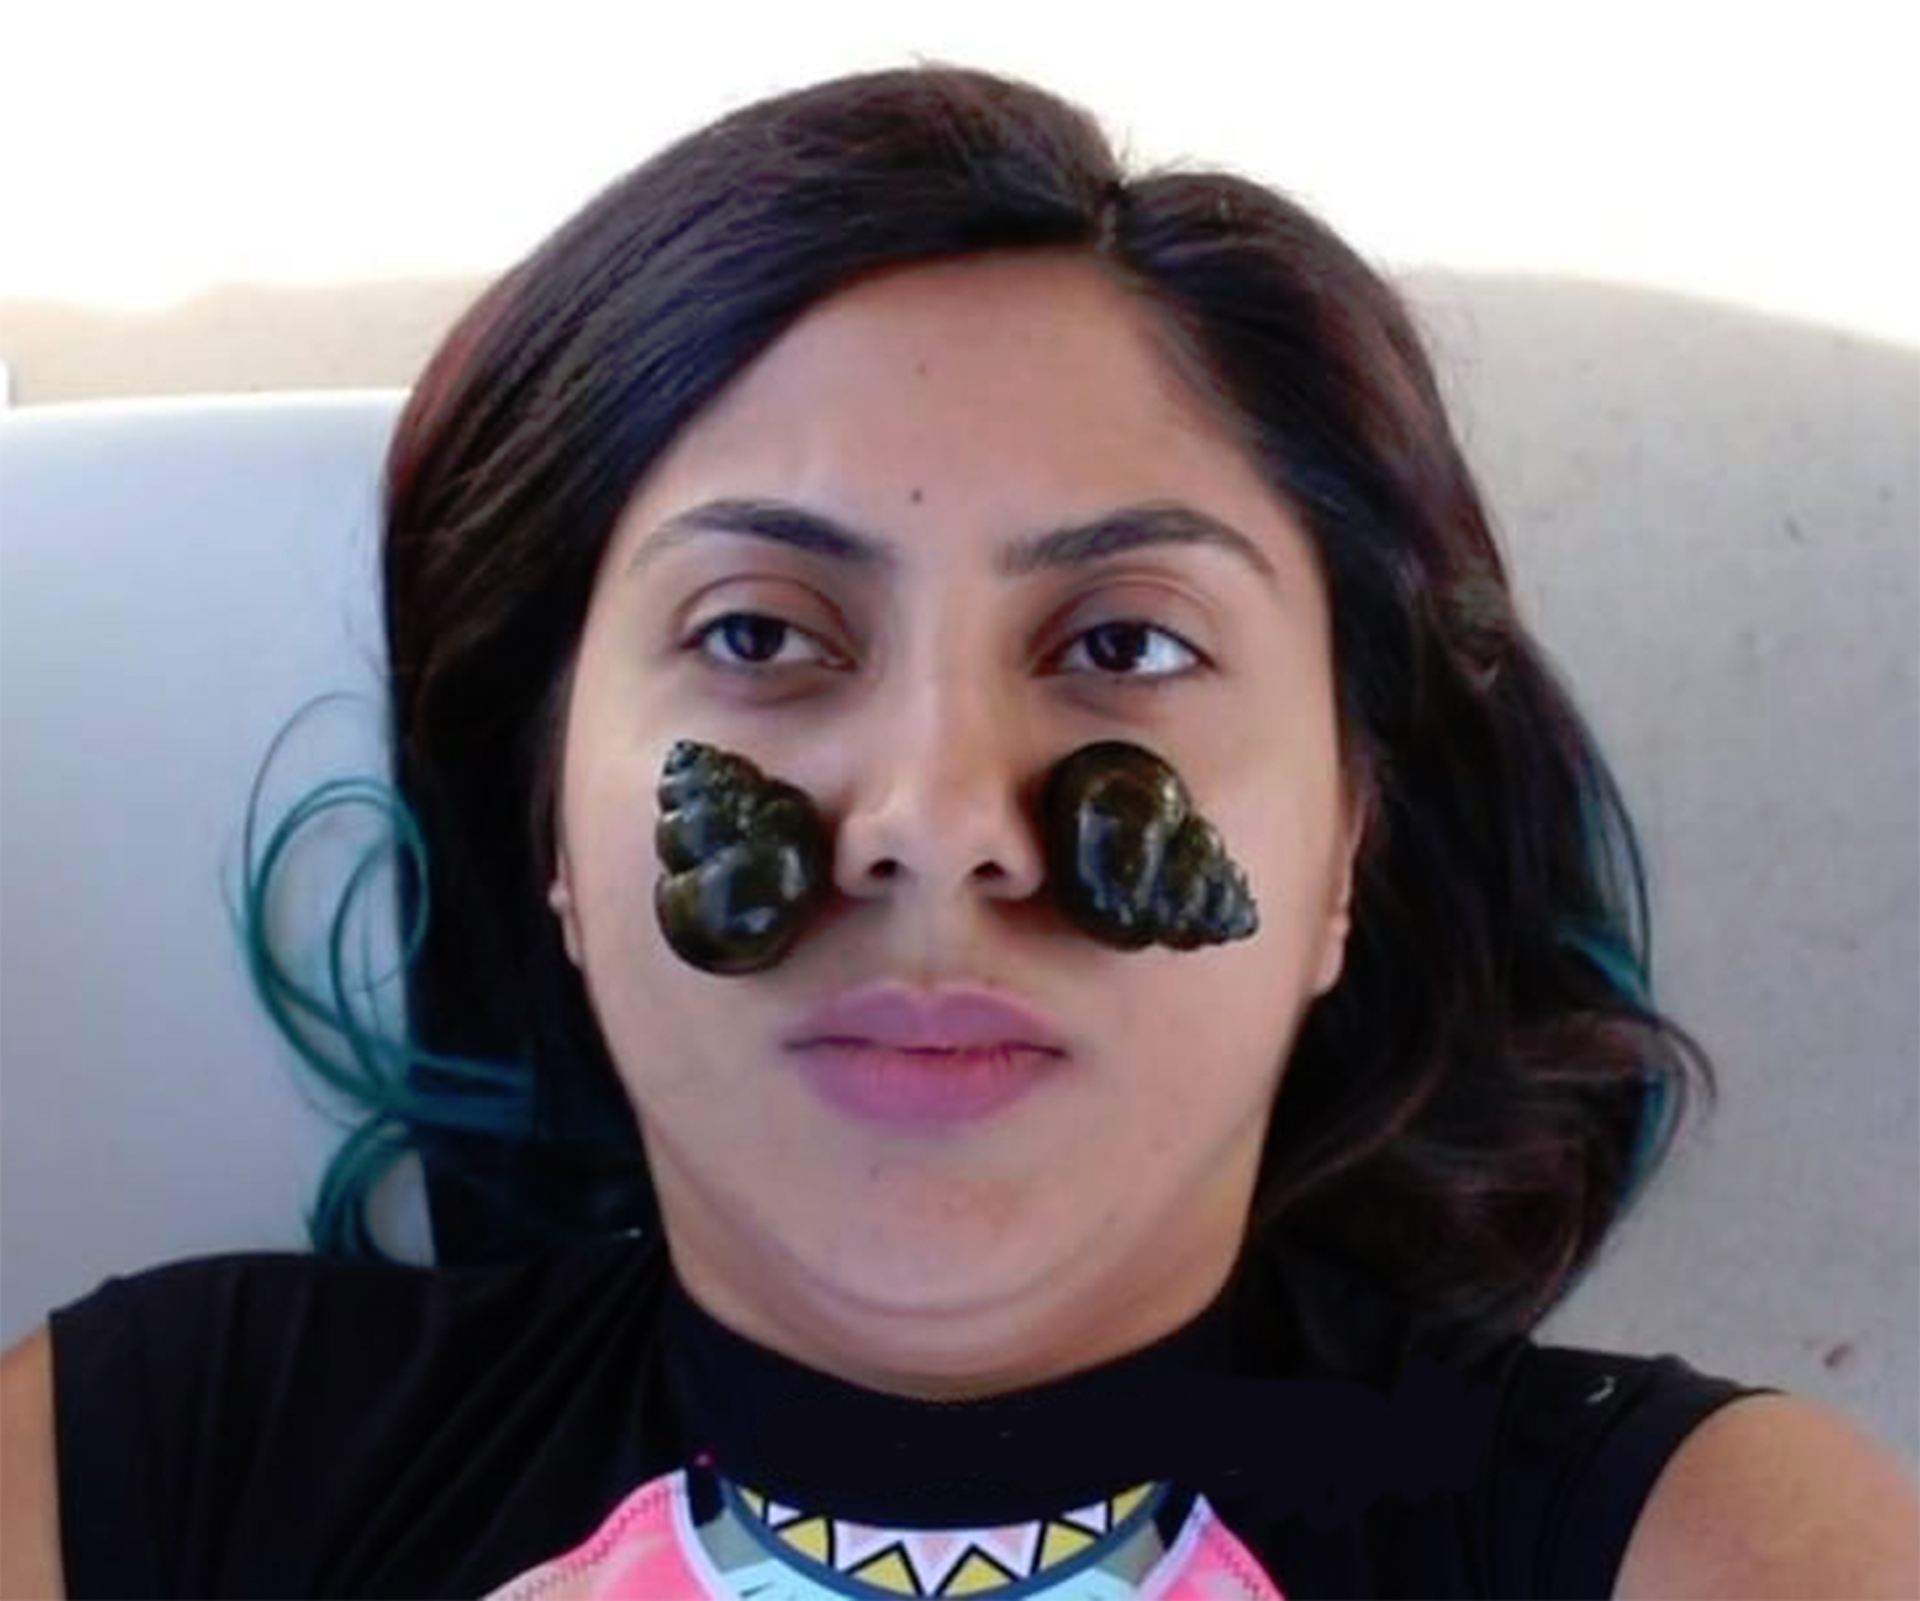 Beauty blogger attempts 'DIY snail facial'